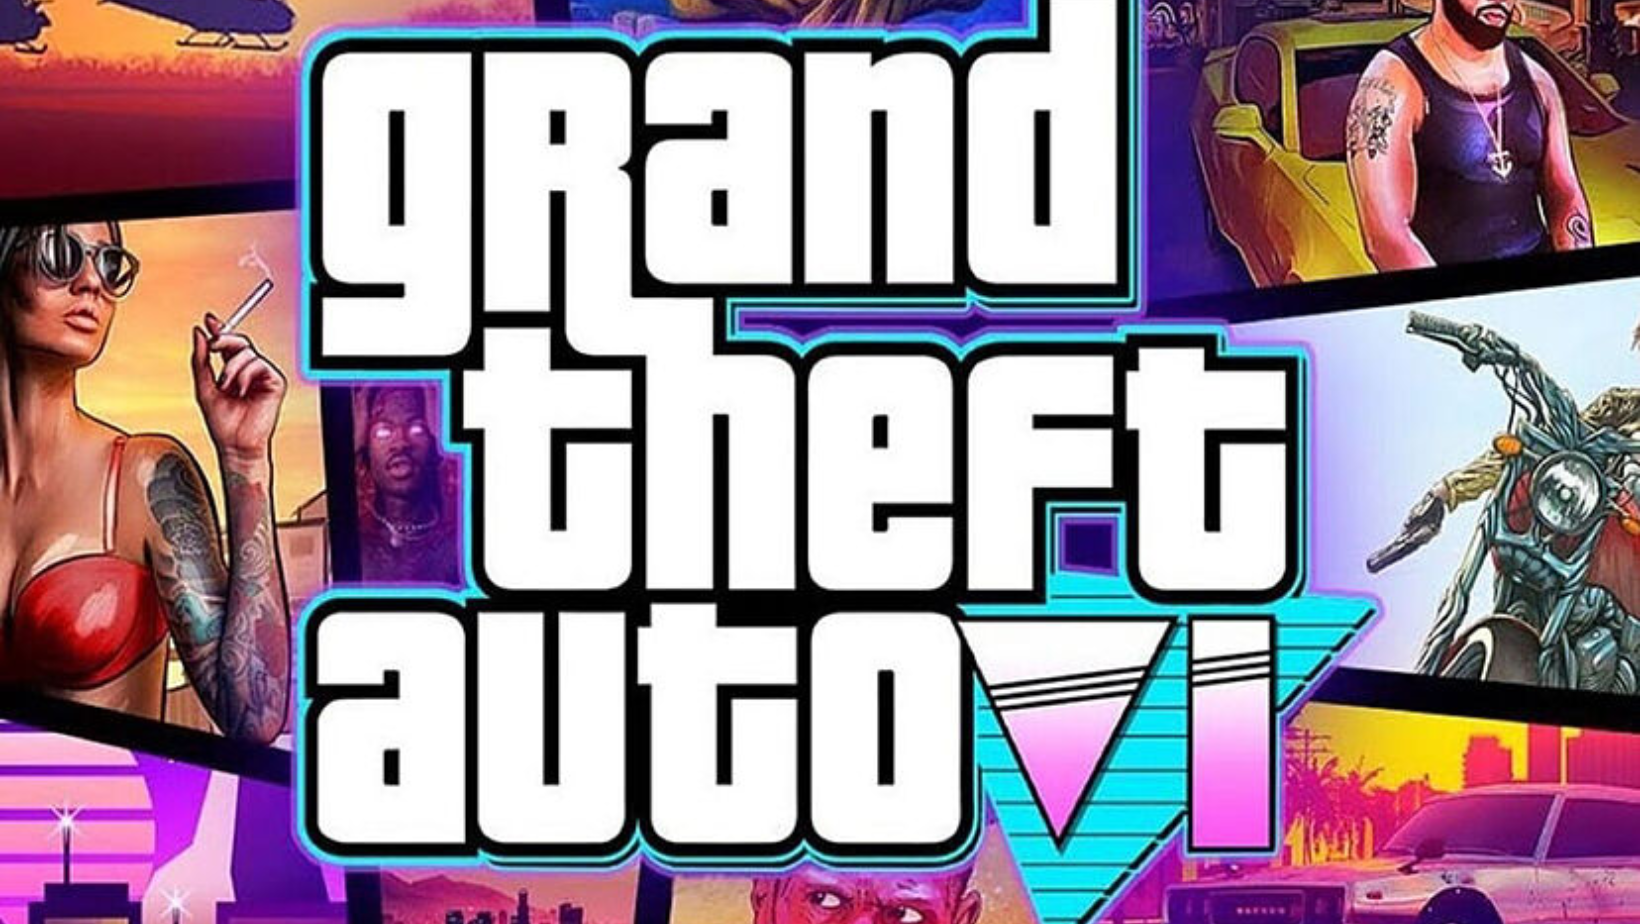 GTA 6 Trailer Breaks YouTube Records, Sparks Frenzy in Gaming World